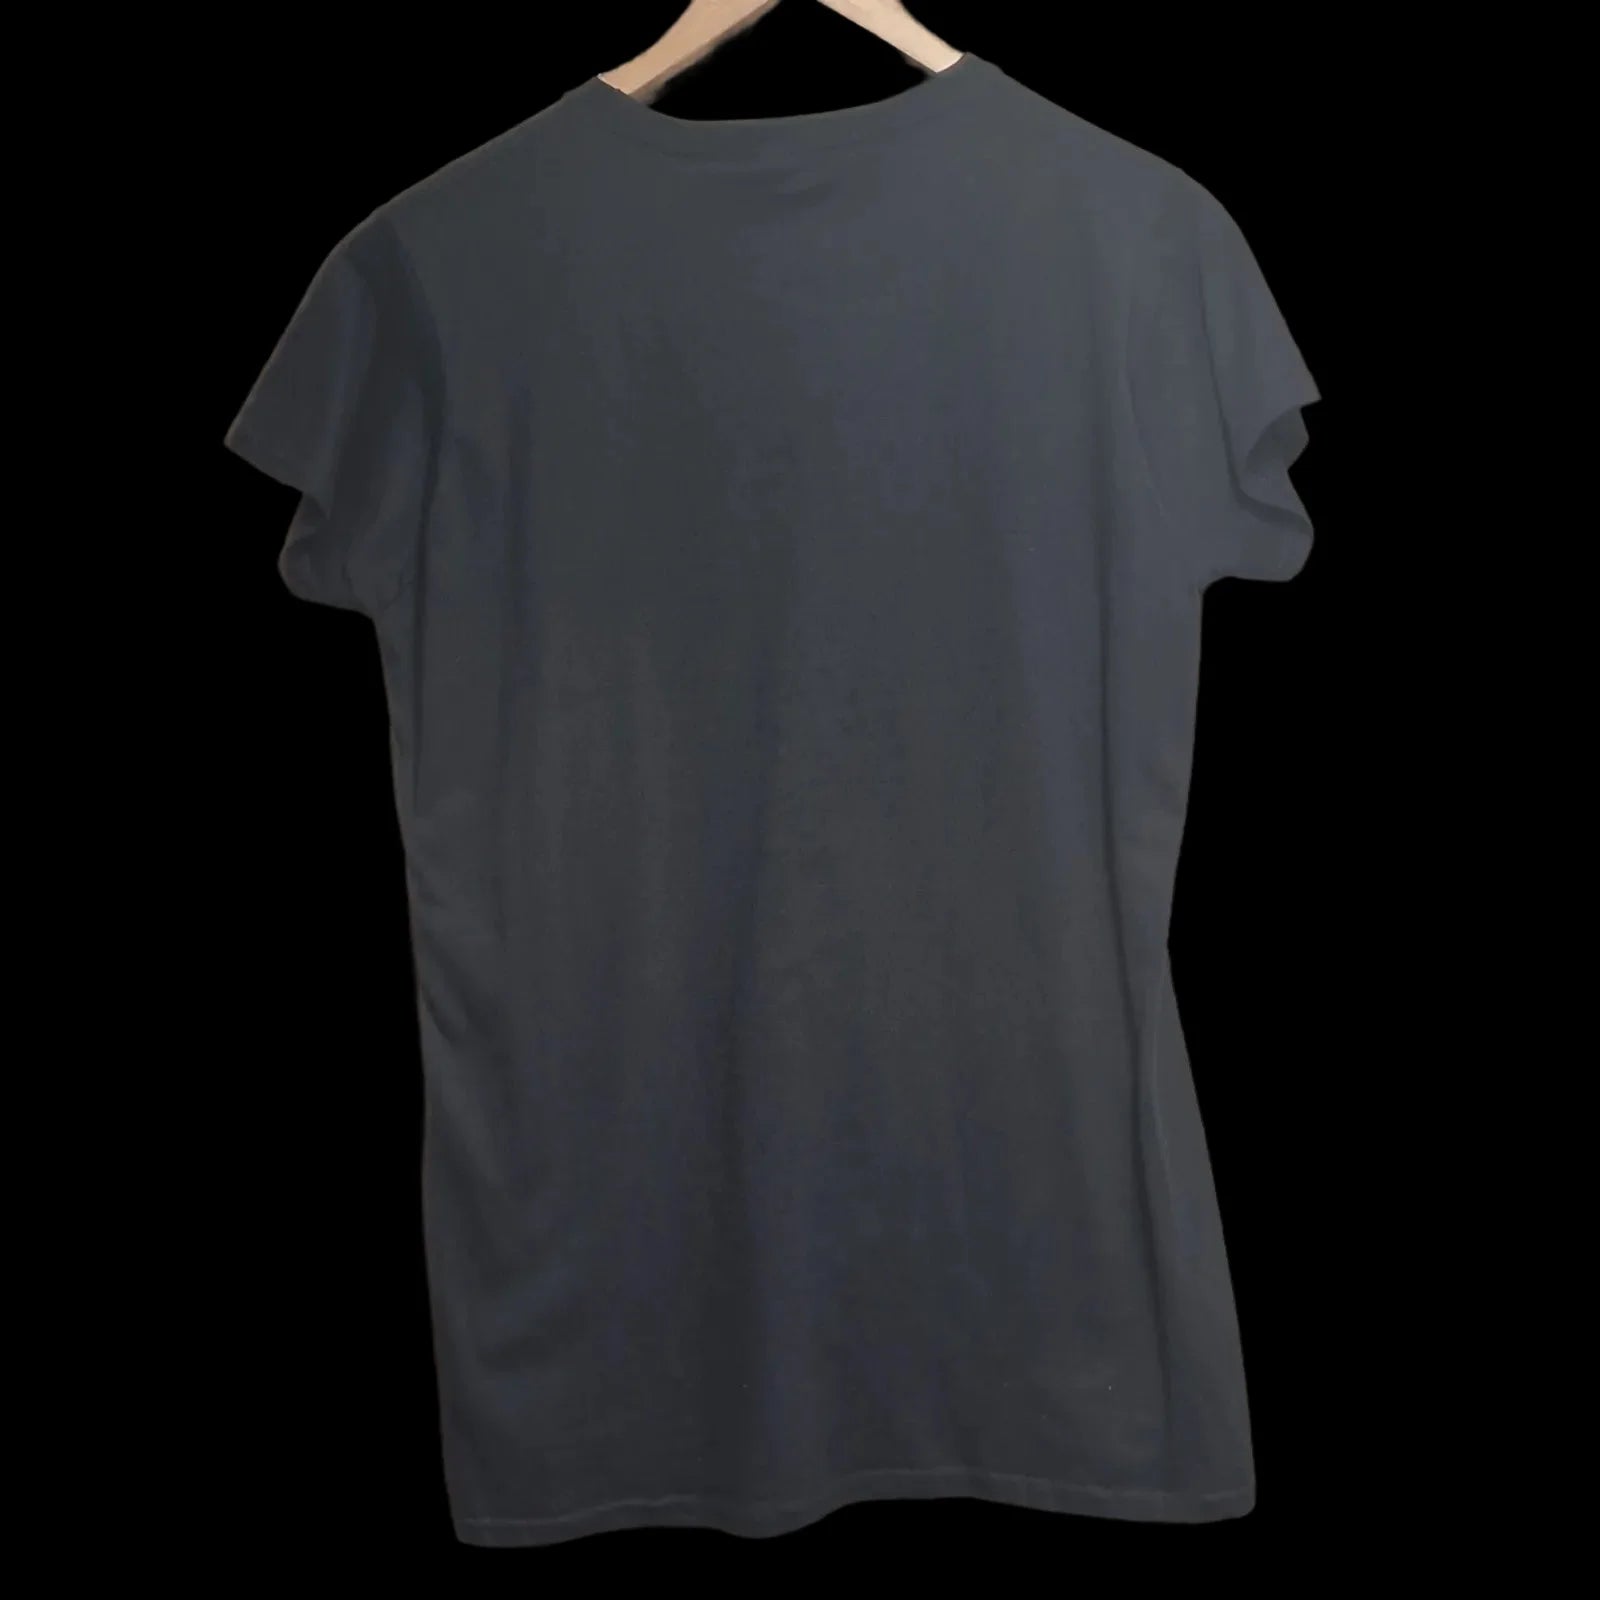 The Lounge Kittens Black T-shirt Uk Xl - T-Shirts - Gildan